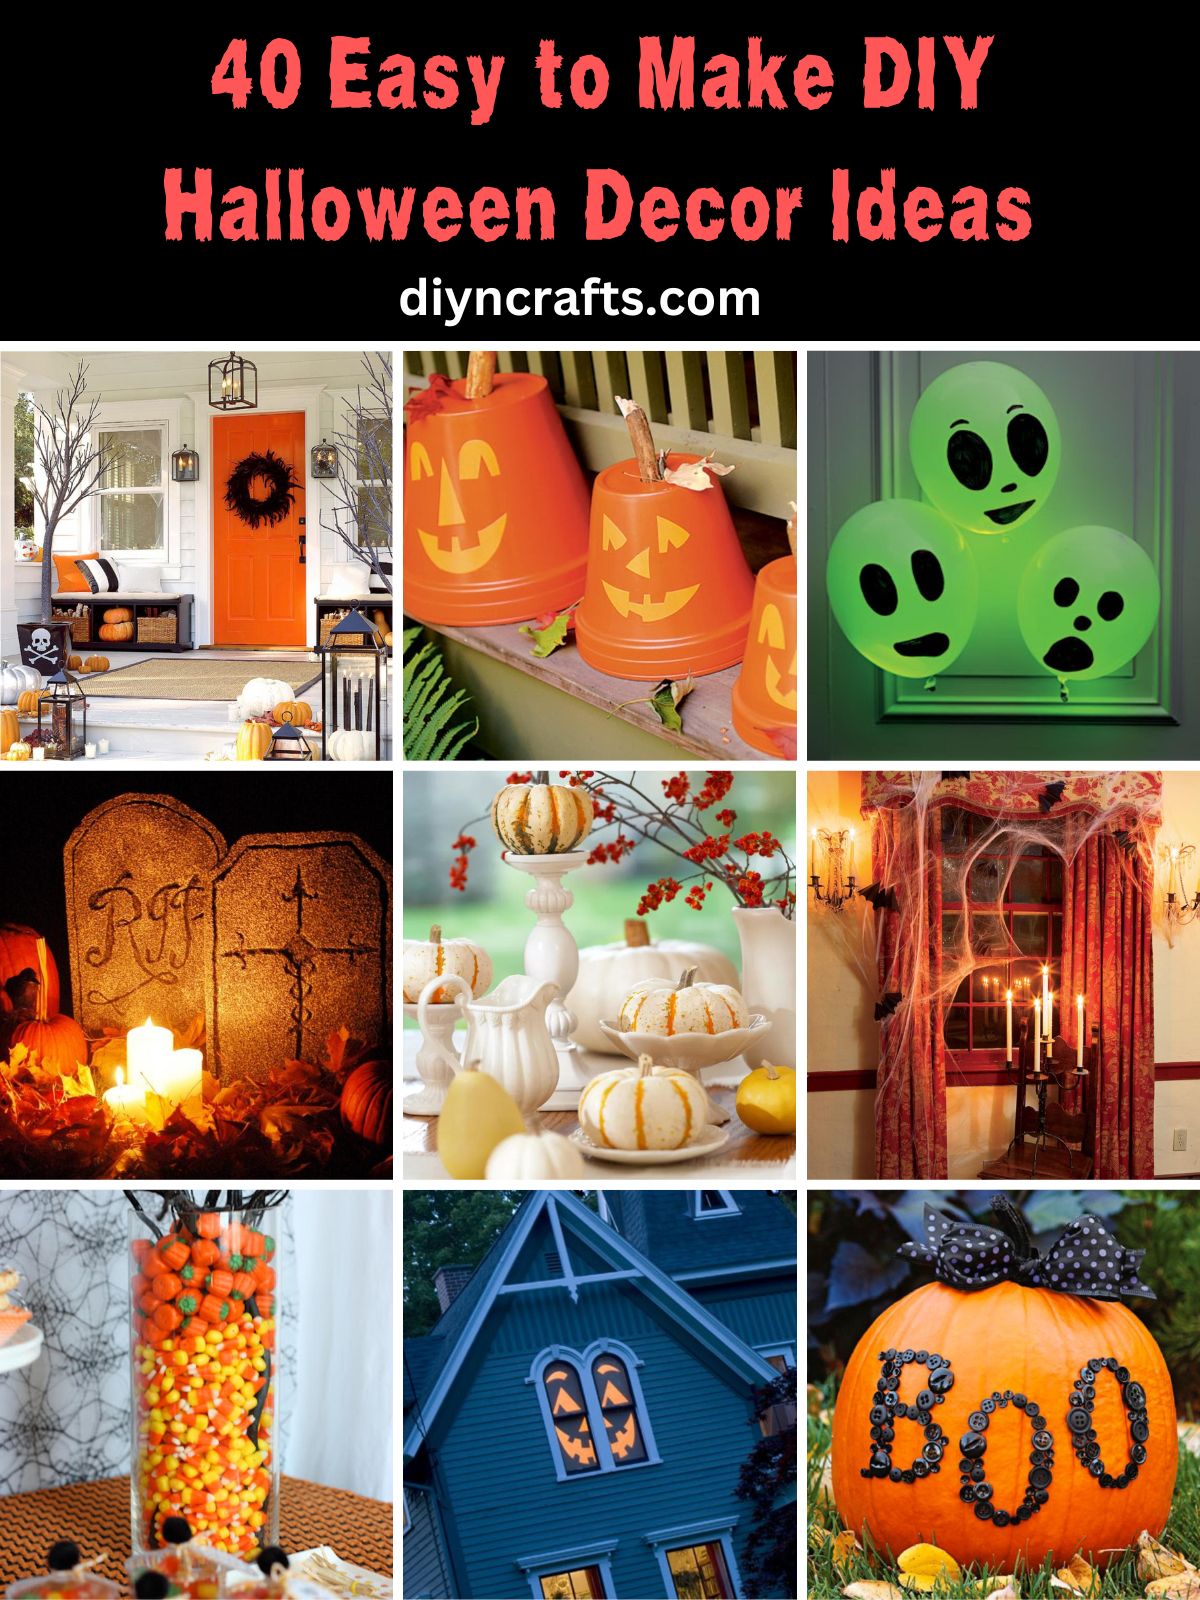 40 Easy to Make DIY Halloween Decor Ideas collage.